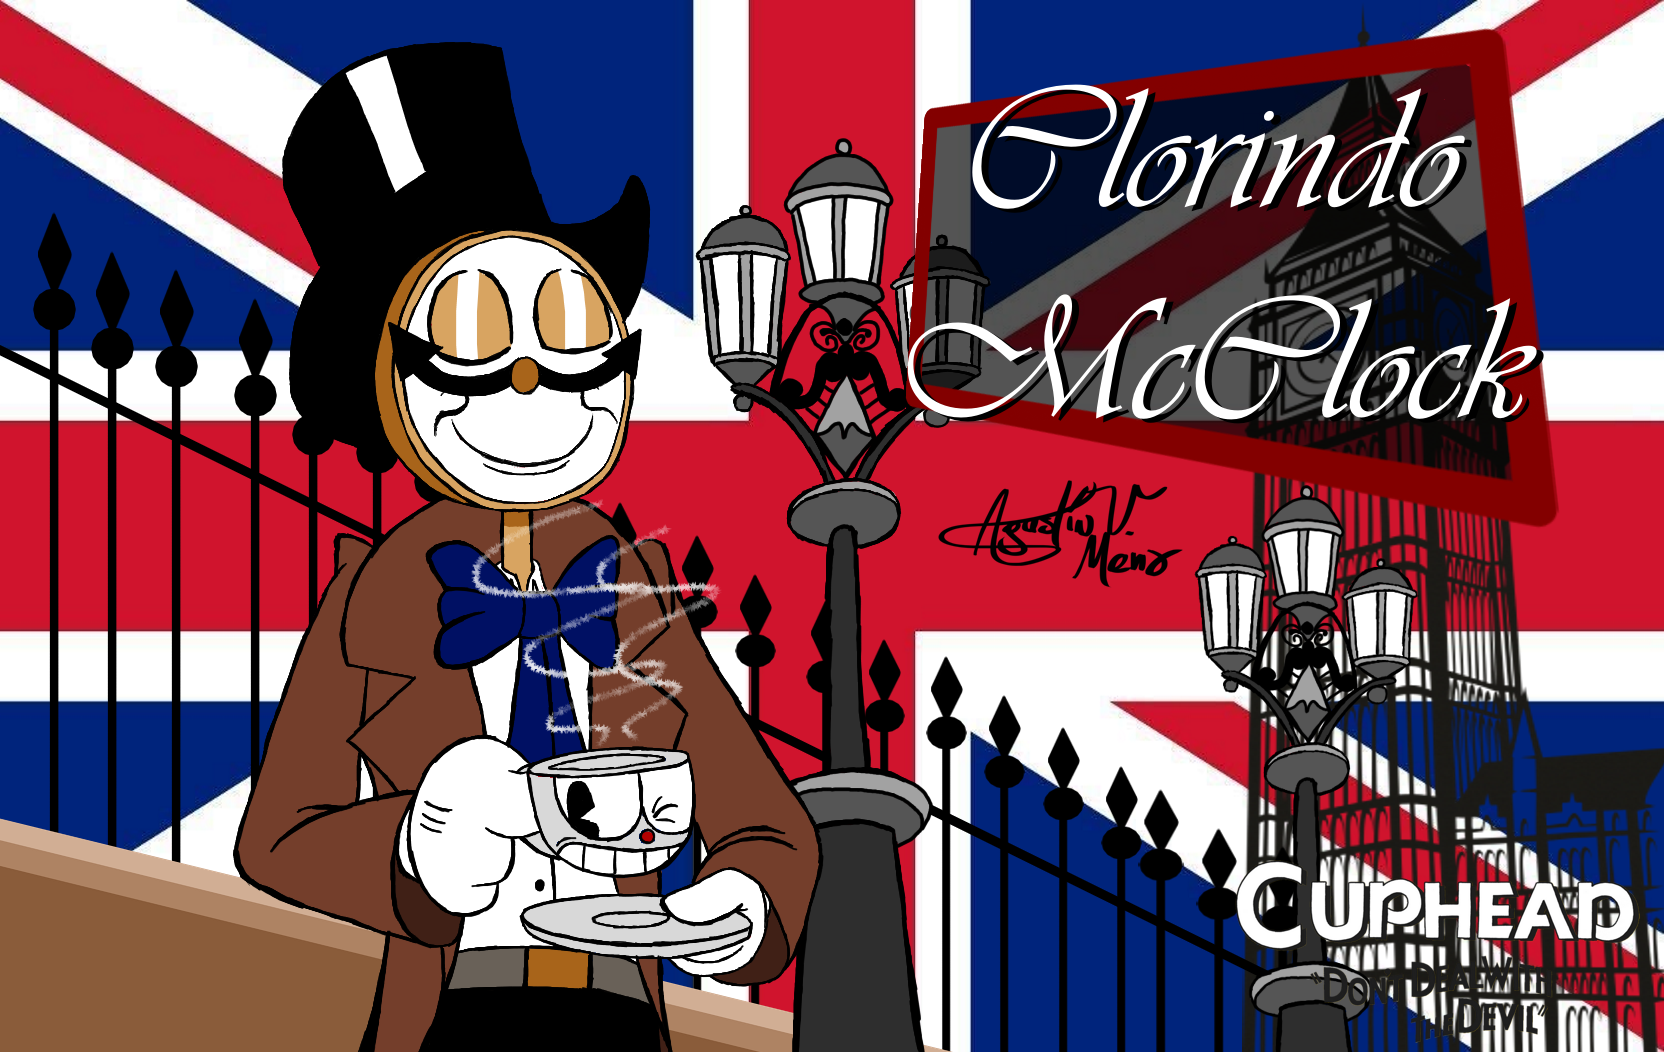 Clorindo McClock - British Man by AVM-Cartoons on DeviantArt